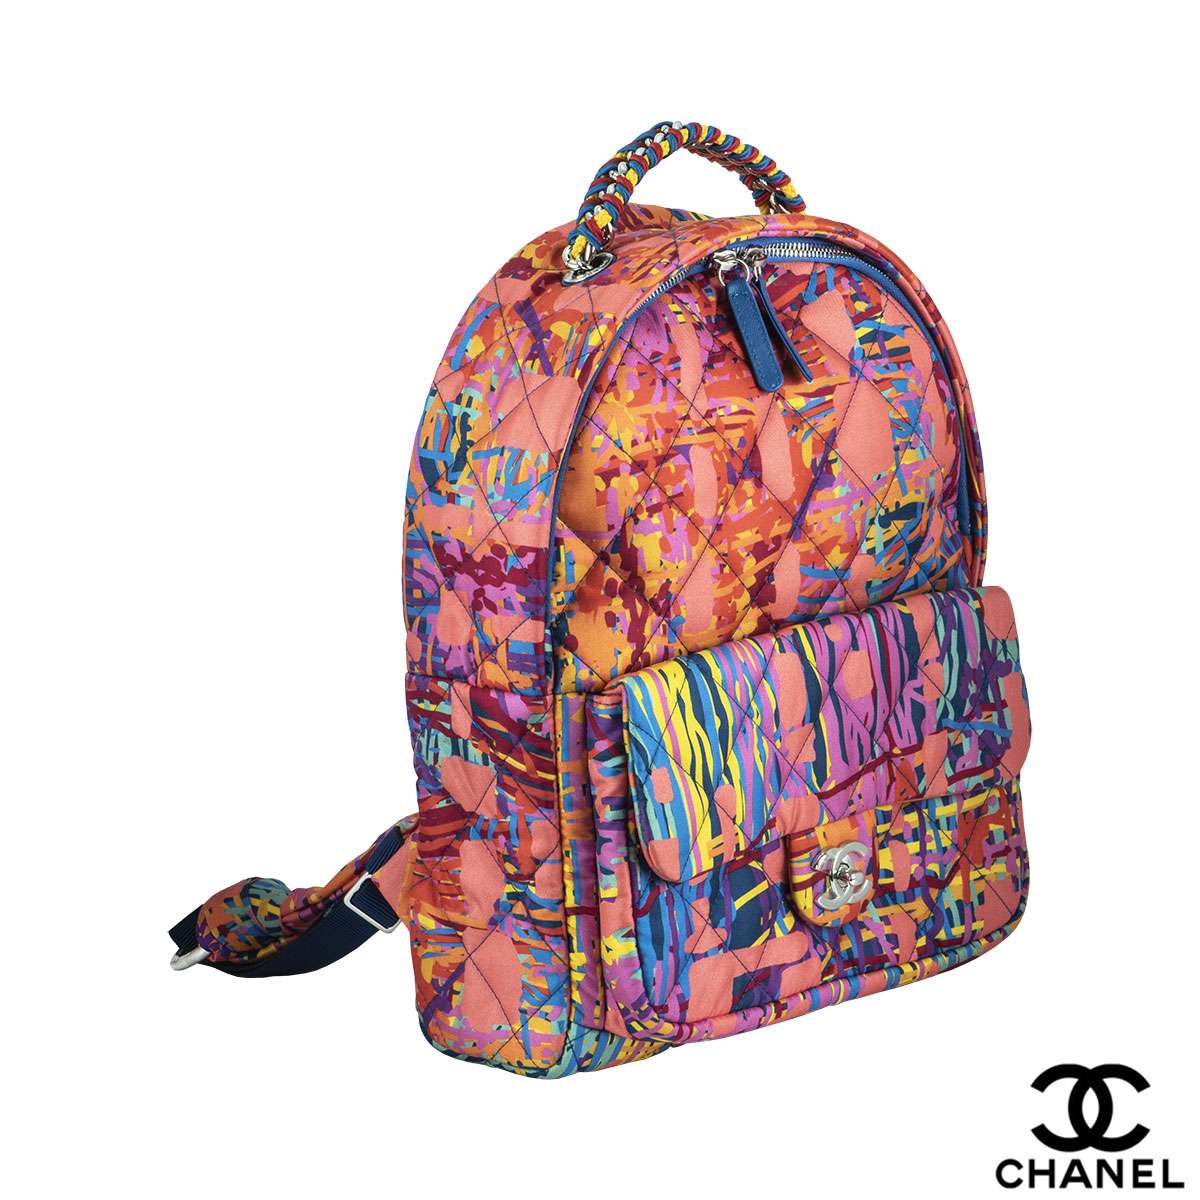 Chanel Graffiti Multicolored Summer 2018 Backpack